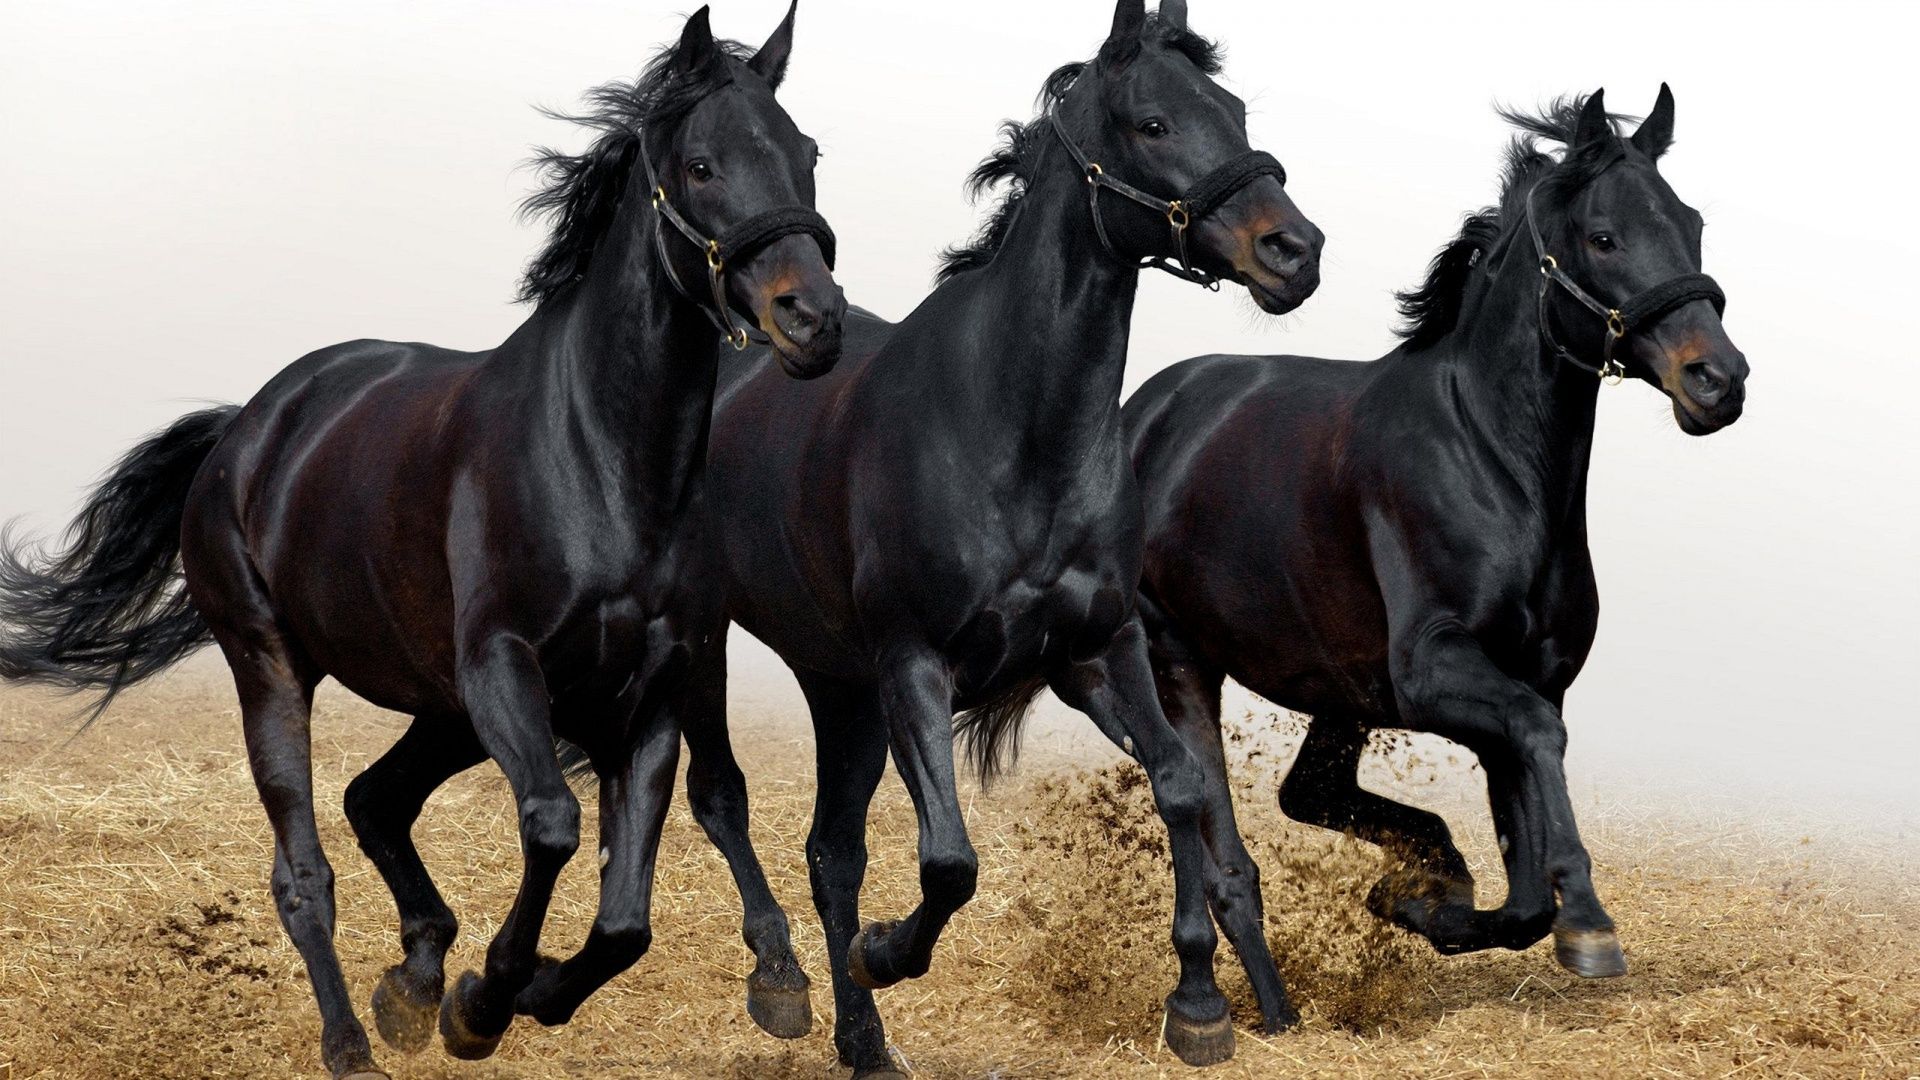 A Herd Of Black Horses